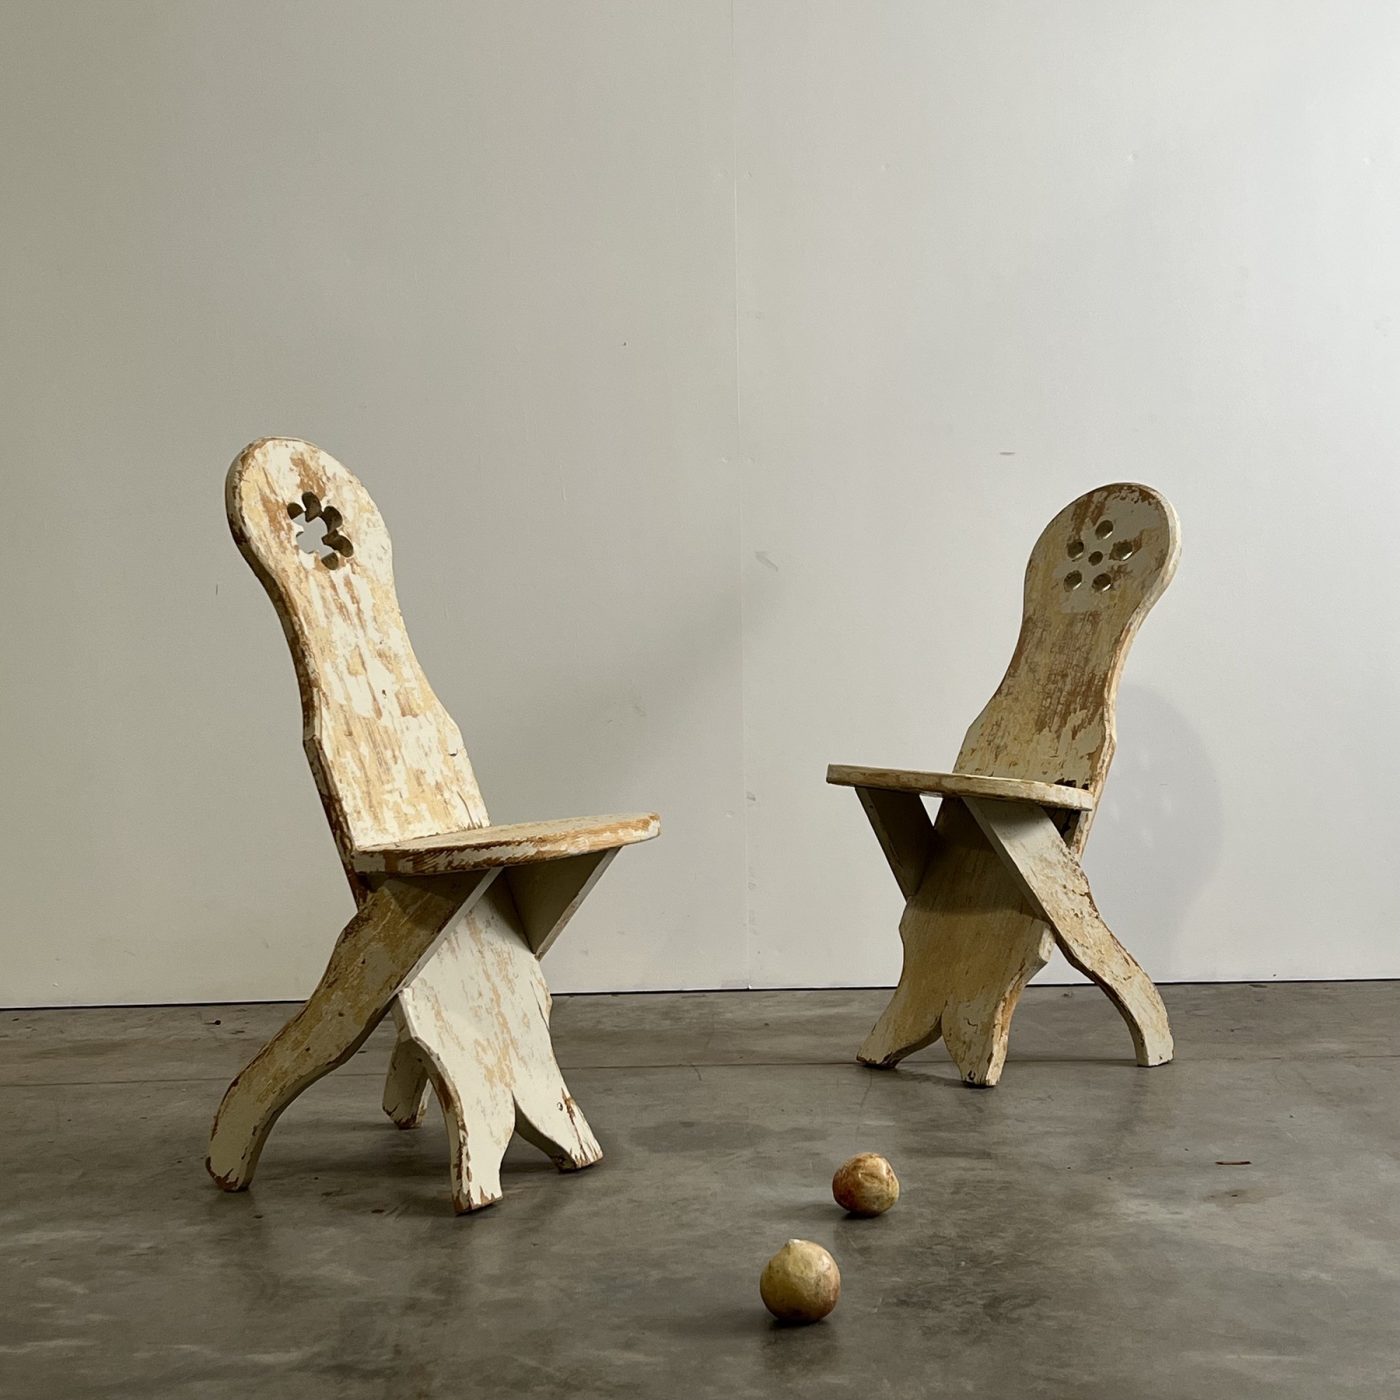 objet-vagabond-painnted-chairs0004